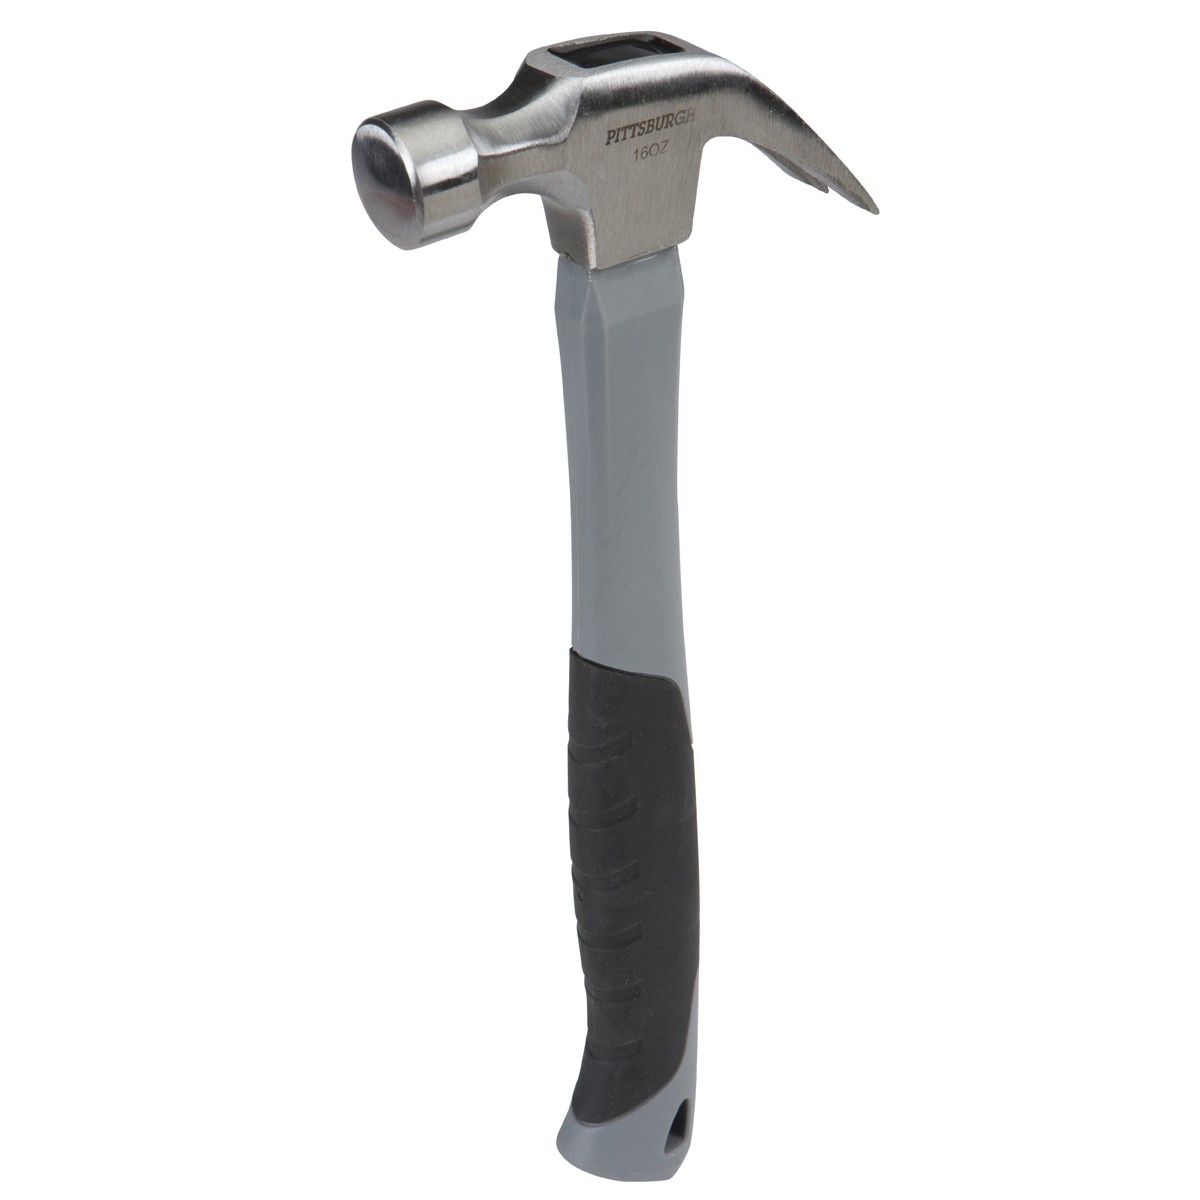 New   Pittsburgh  16 oz. Fiberglass Claw Hammer